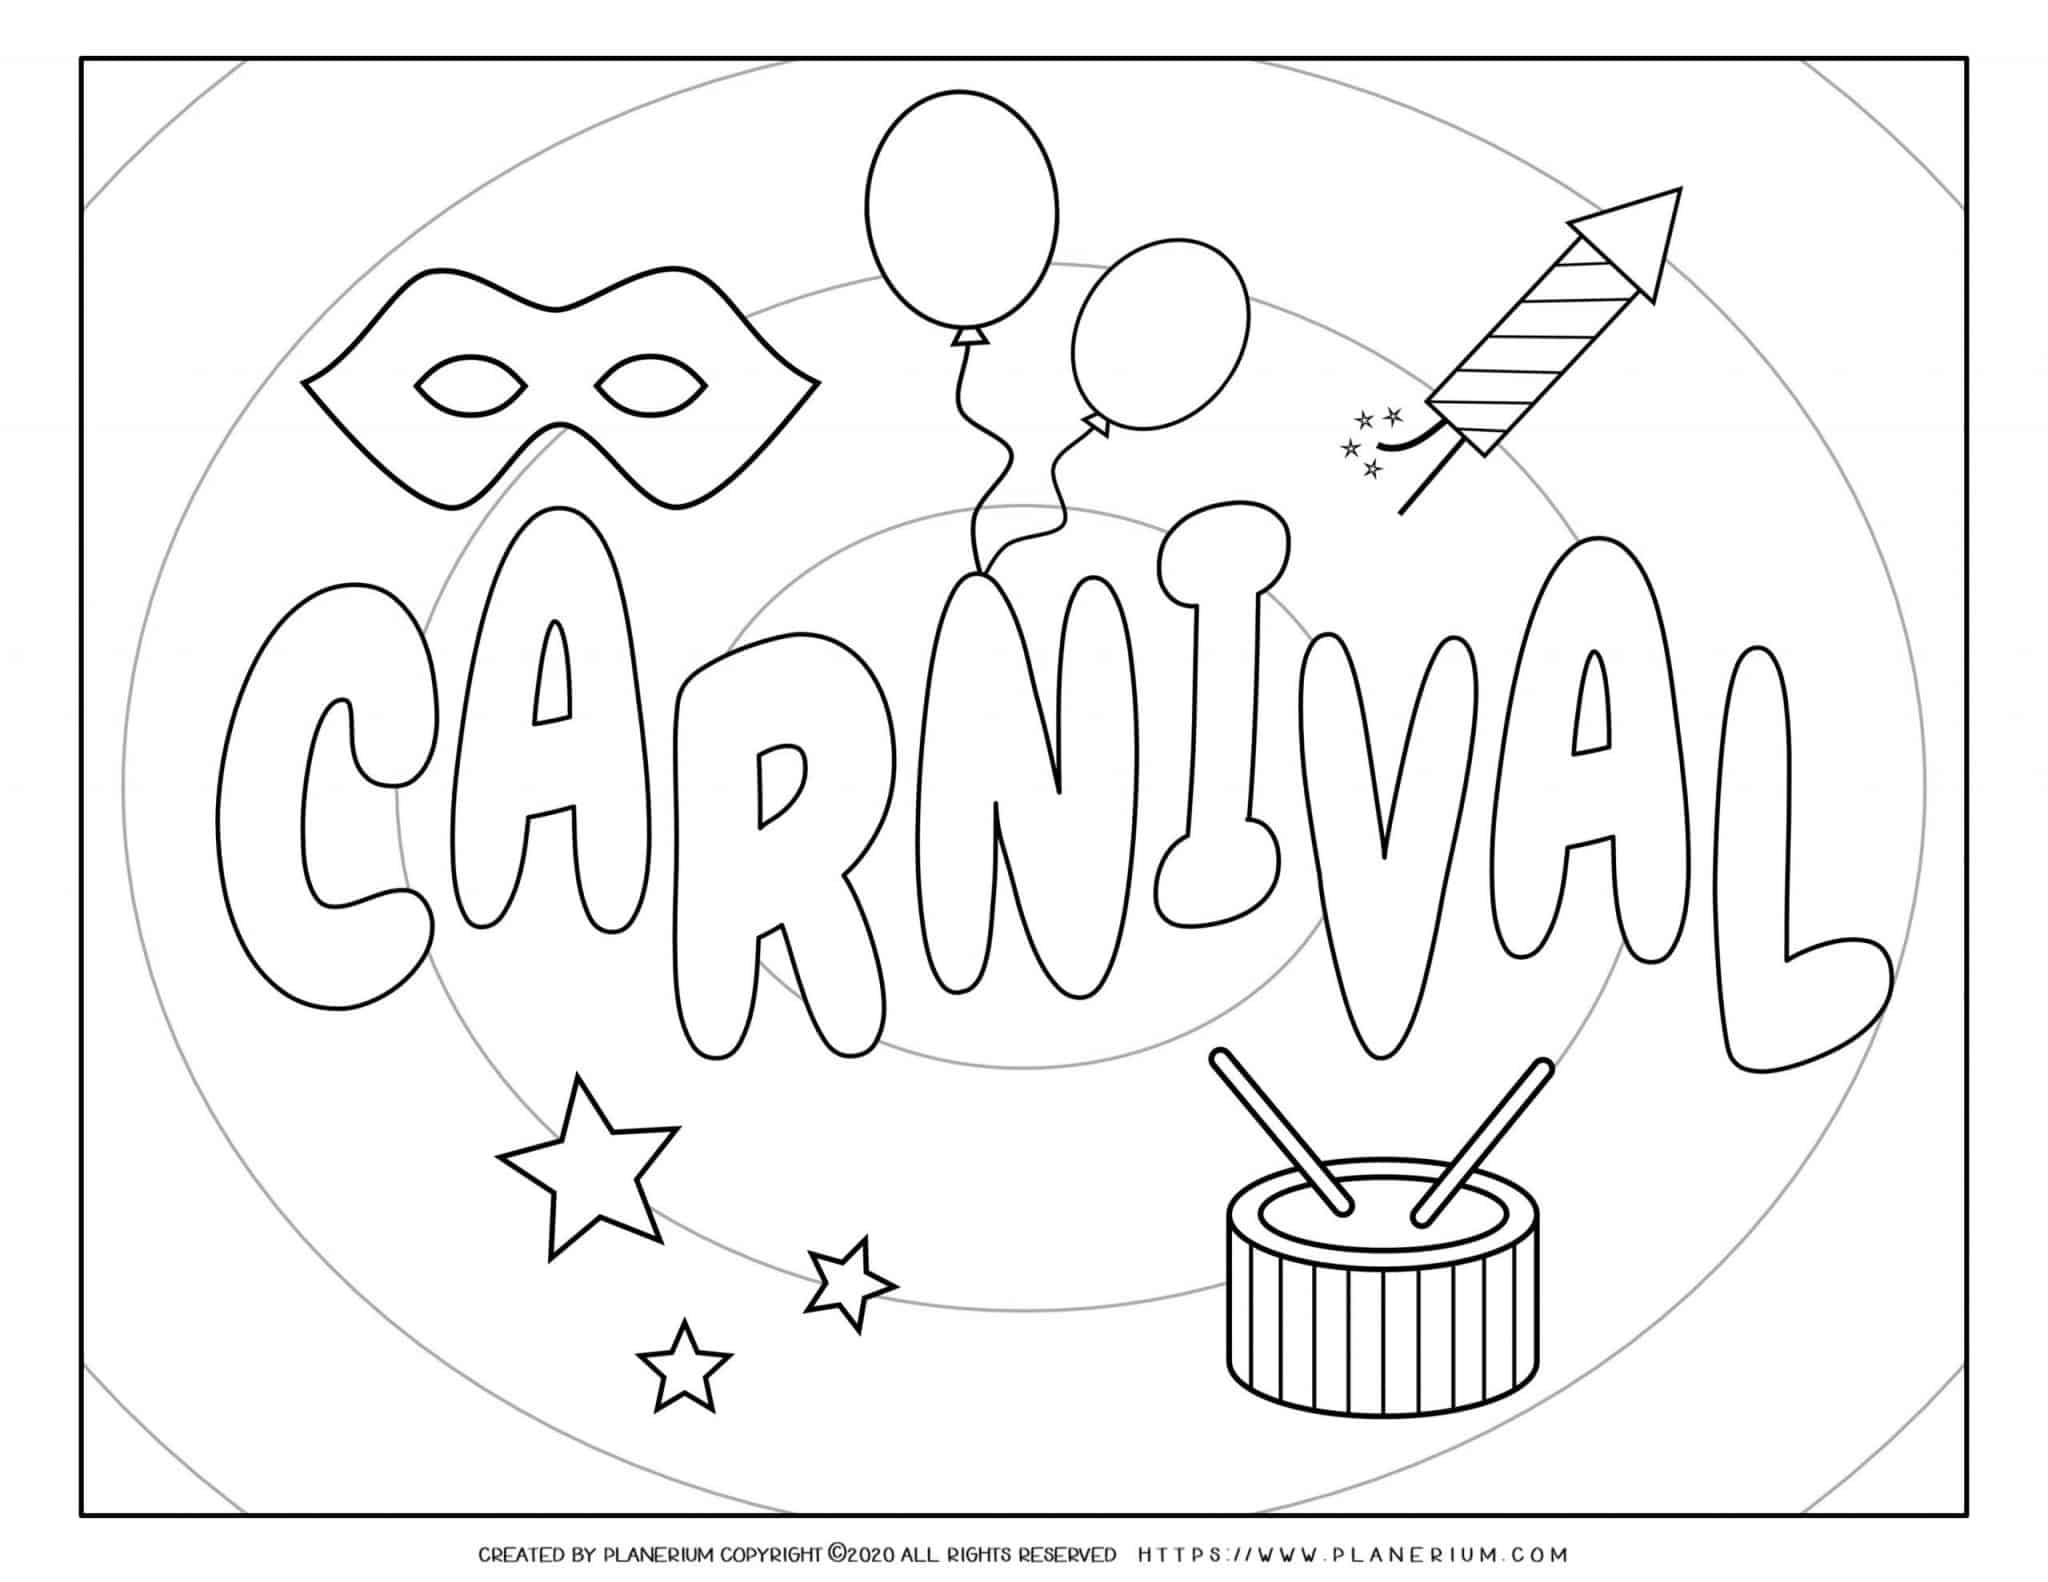 FREE! - Carnival Mask Colouring Sheet Colouring